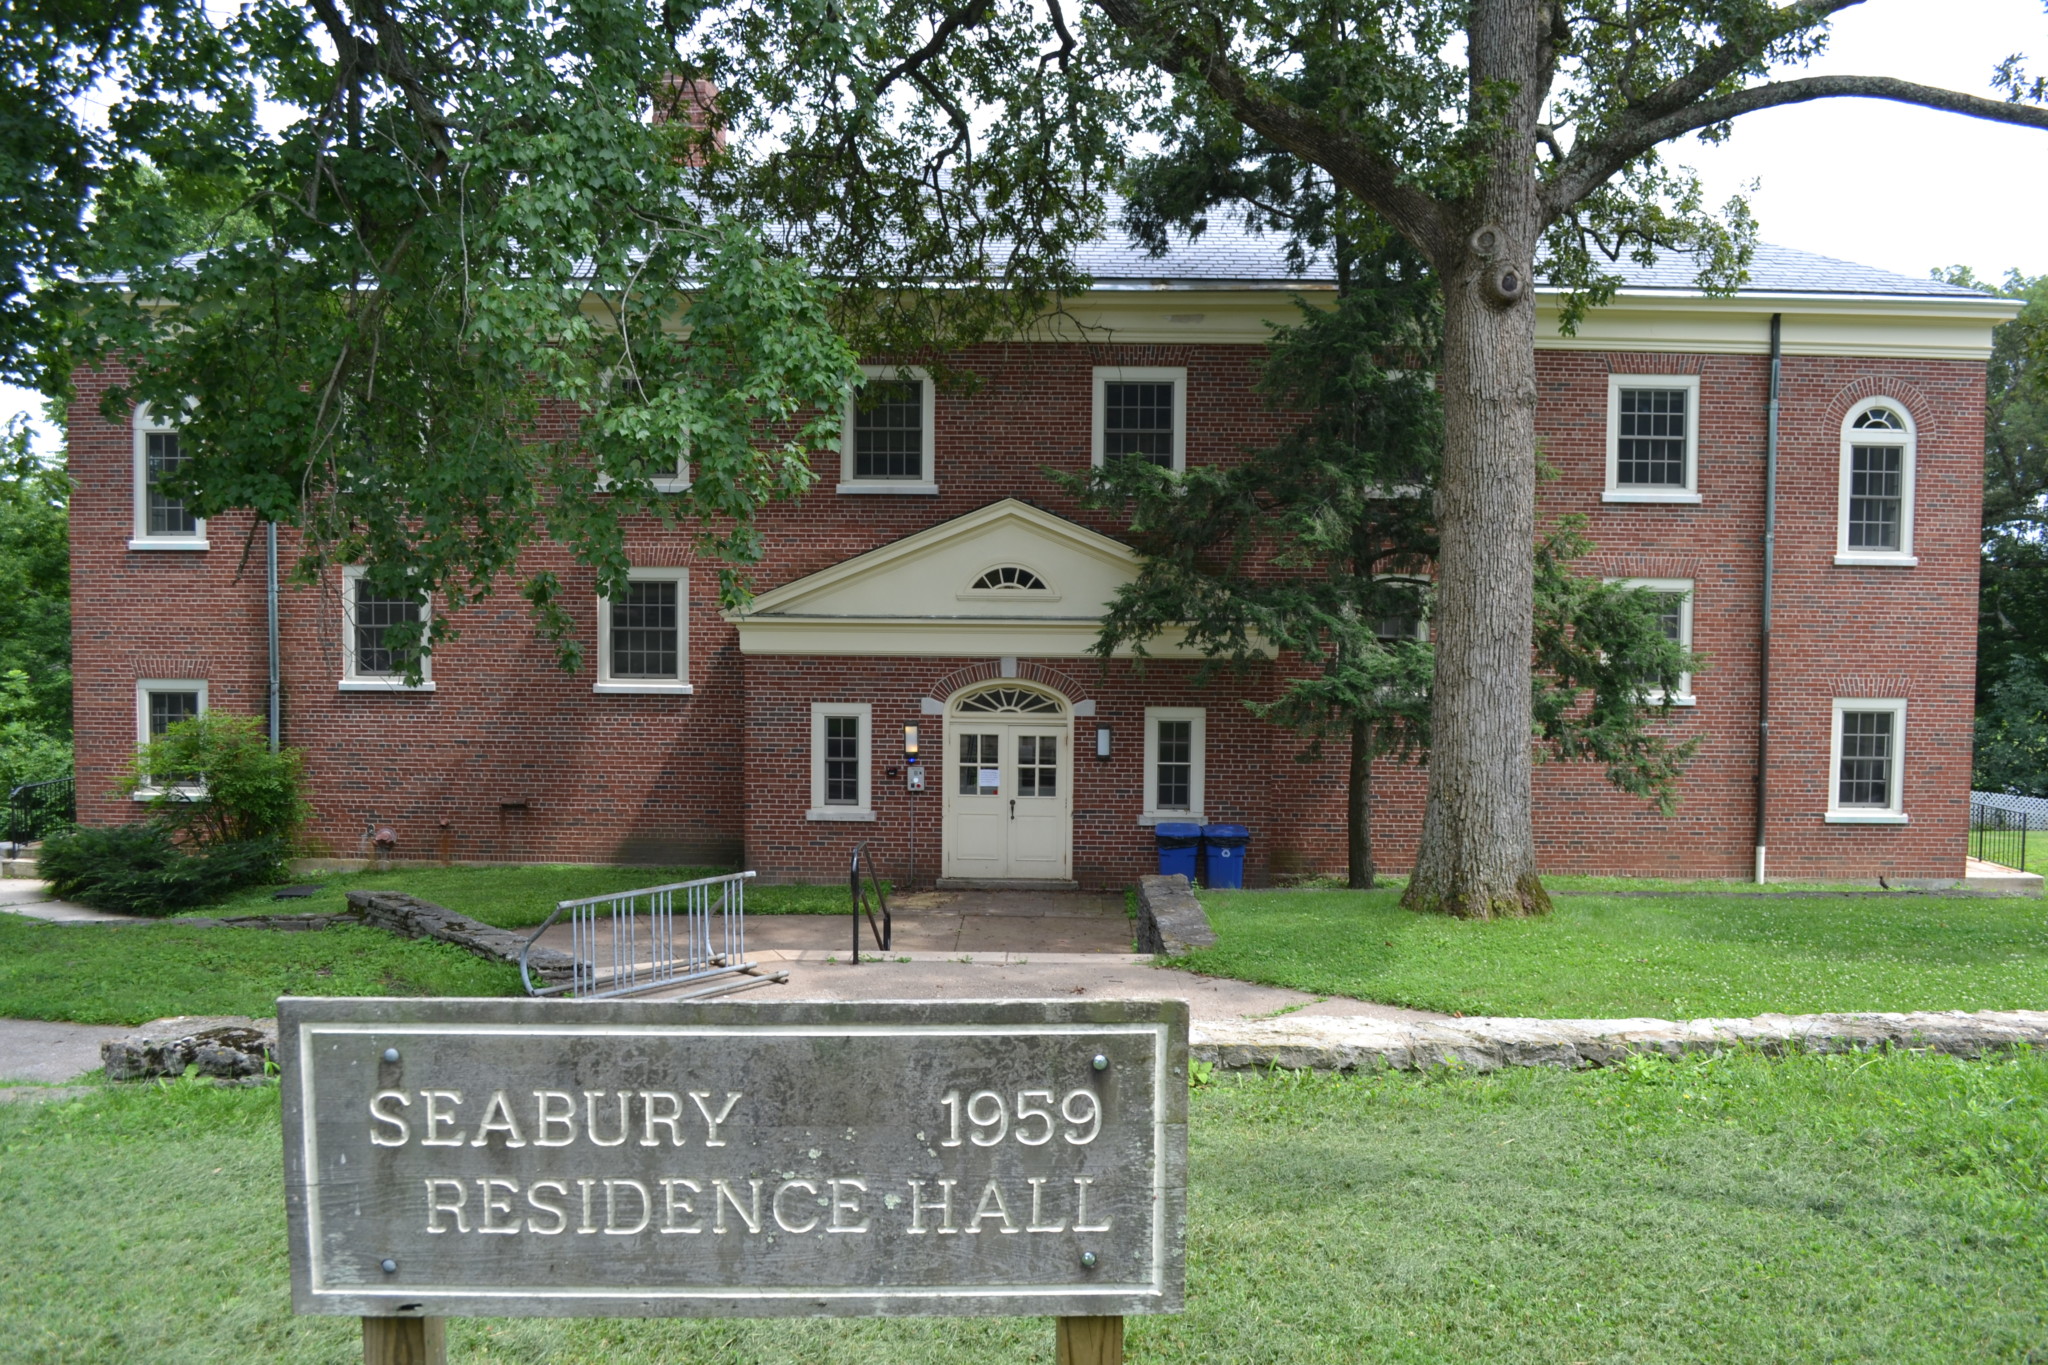 Seabury Residence hall